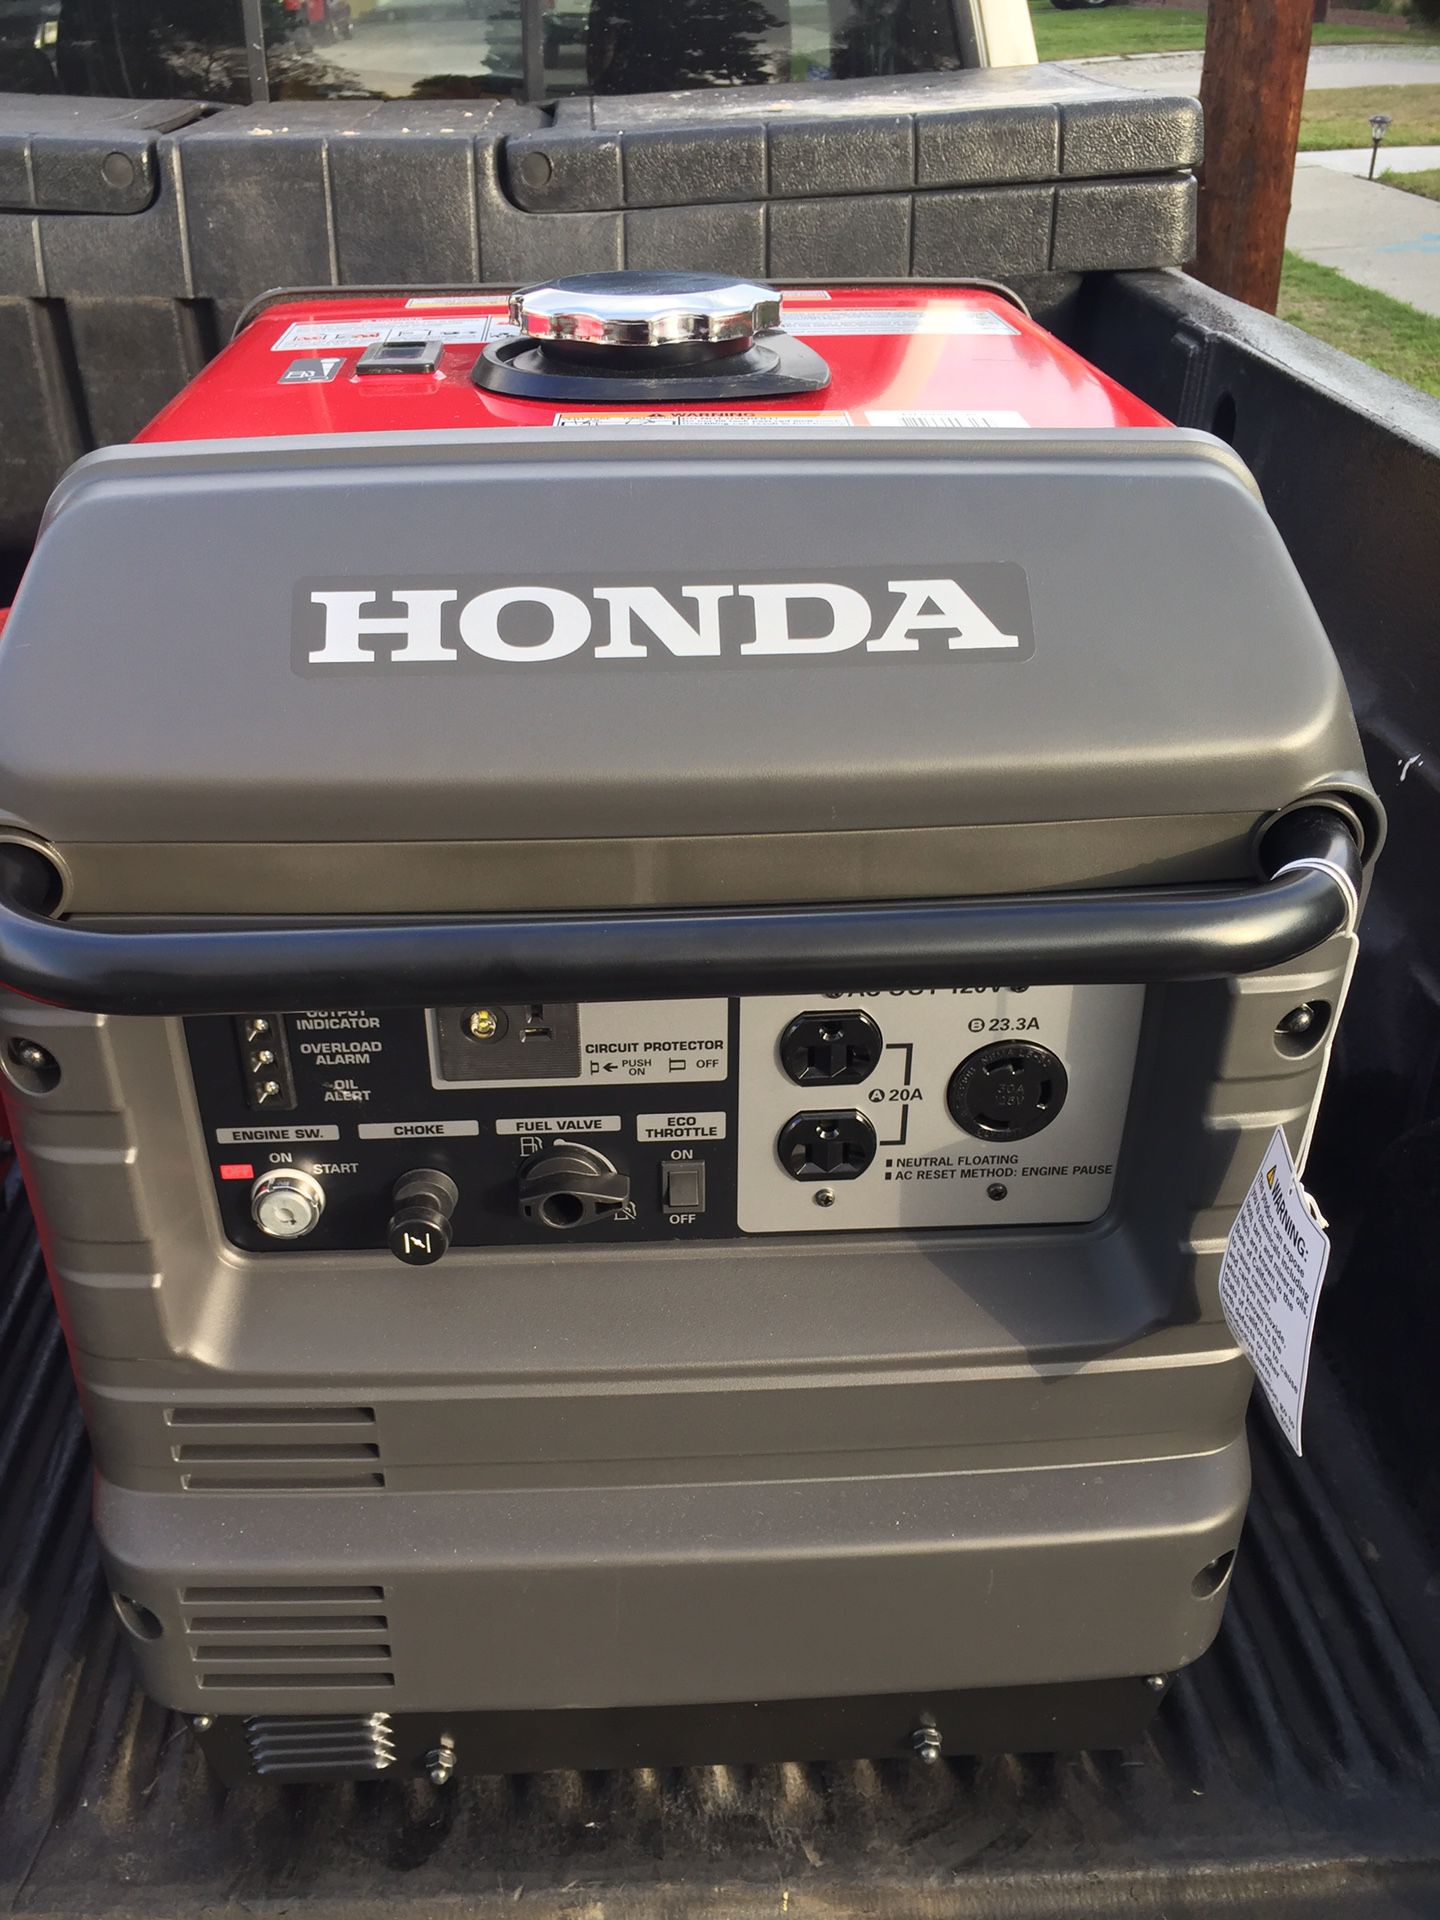 New Honda eu3000is generator inverter out of box